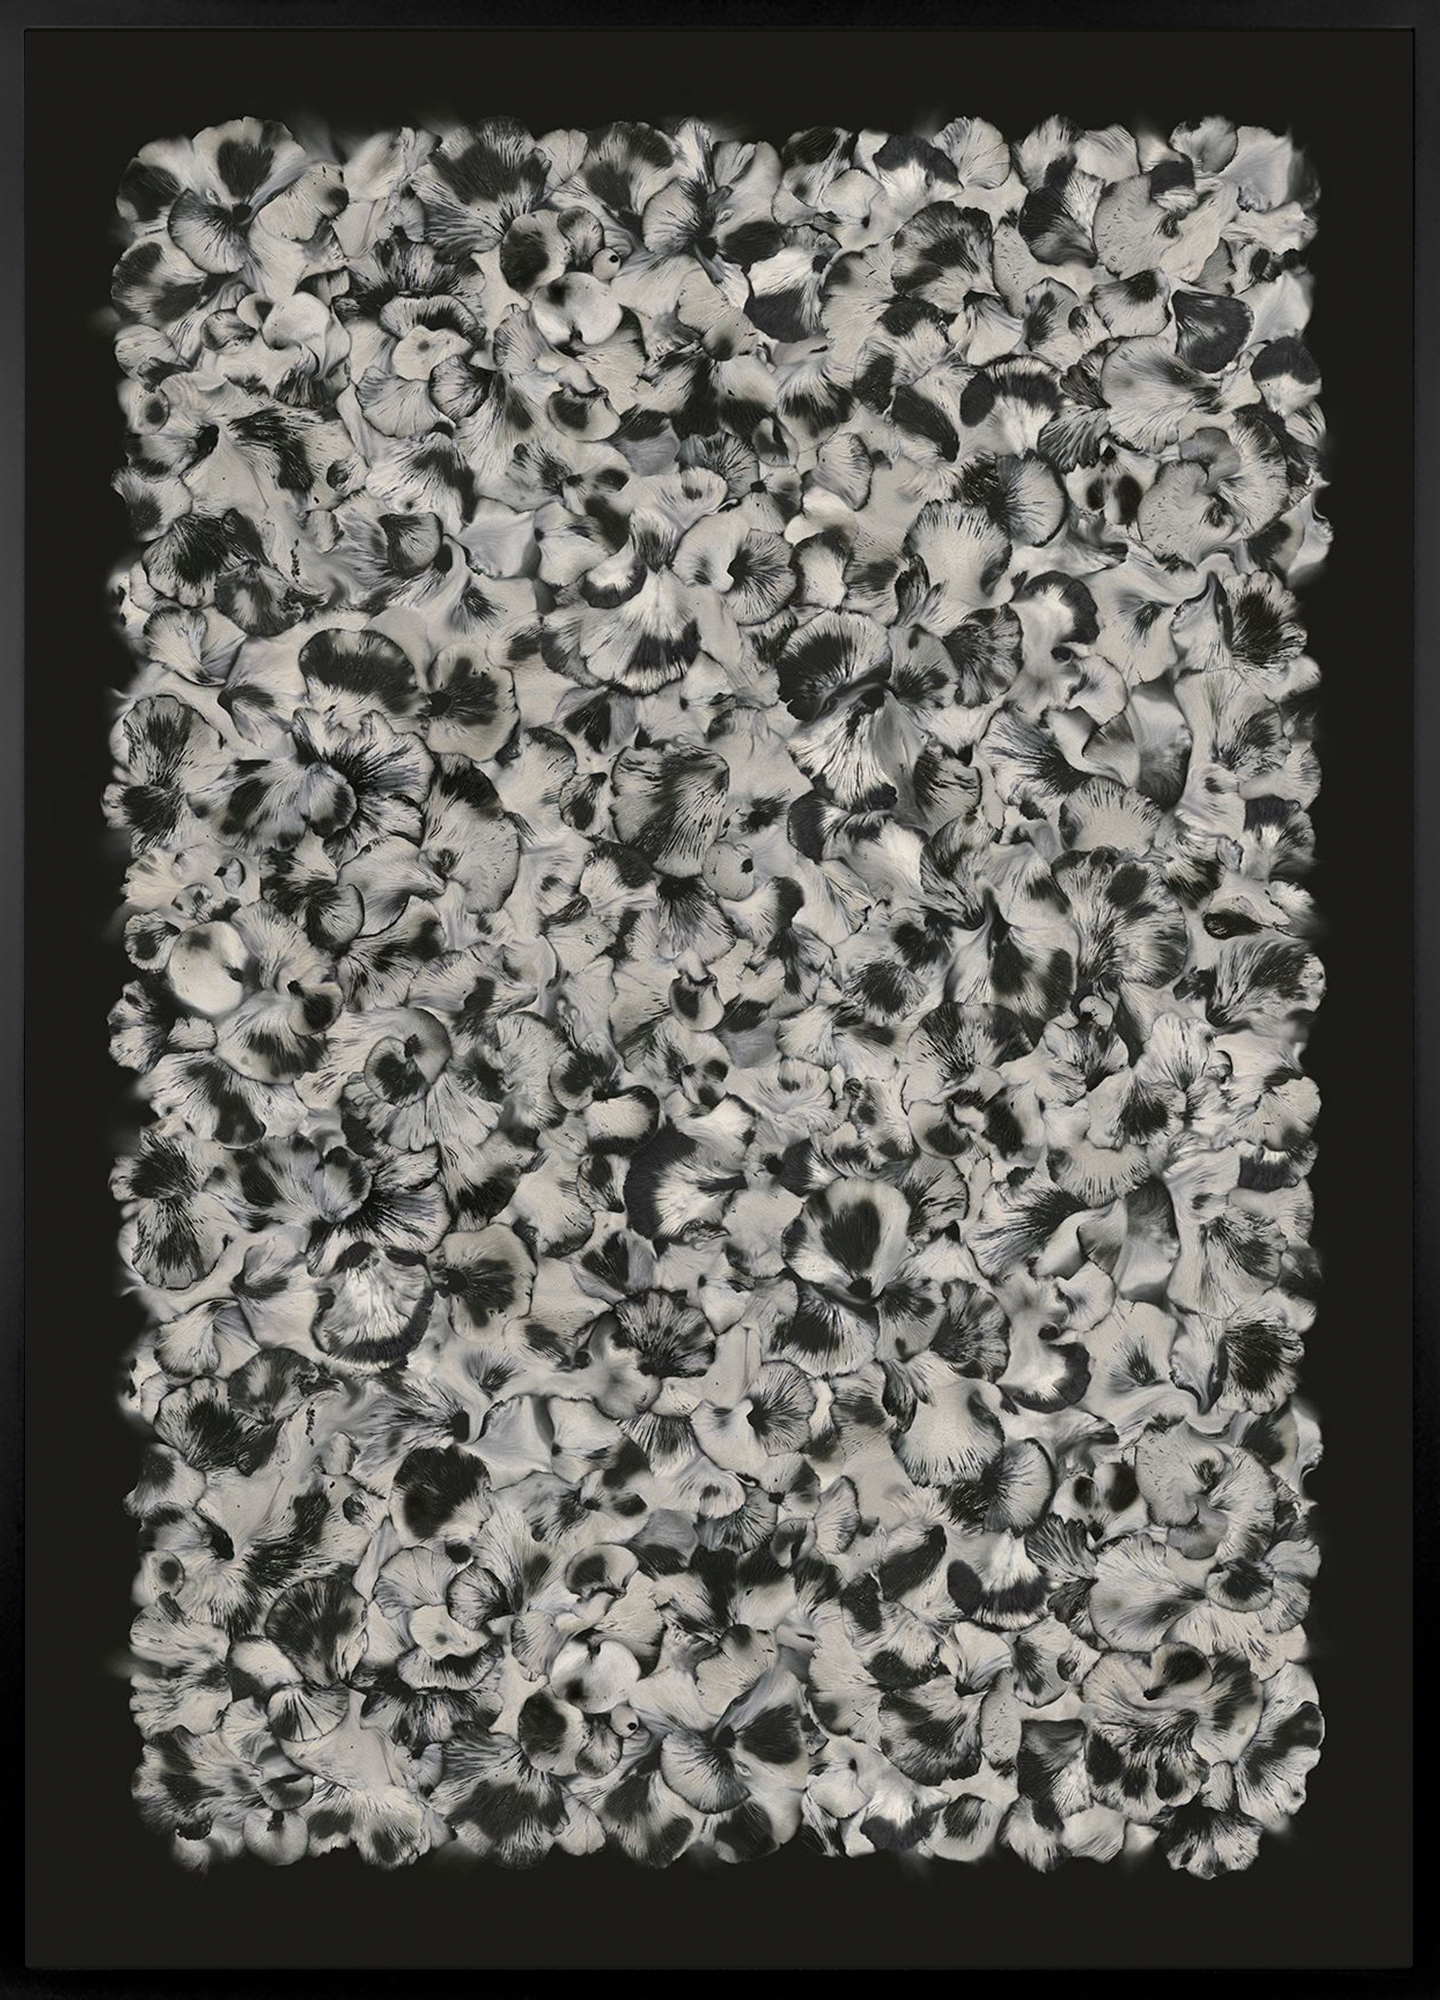 Color image of a pigment print depicting a cluster of mushroom spores framed in black